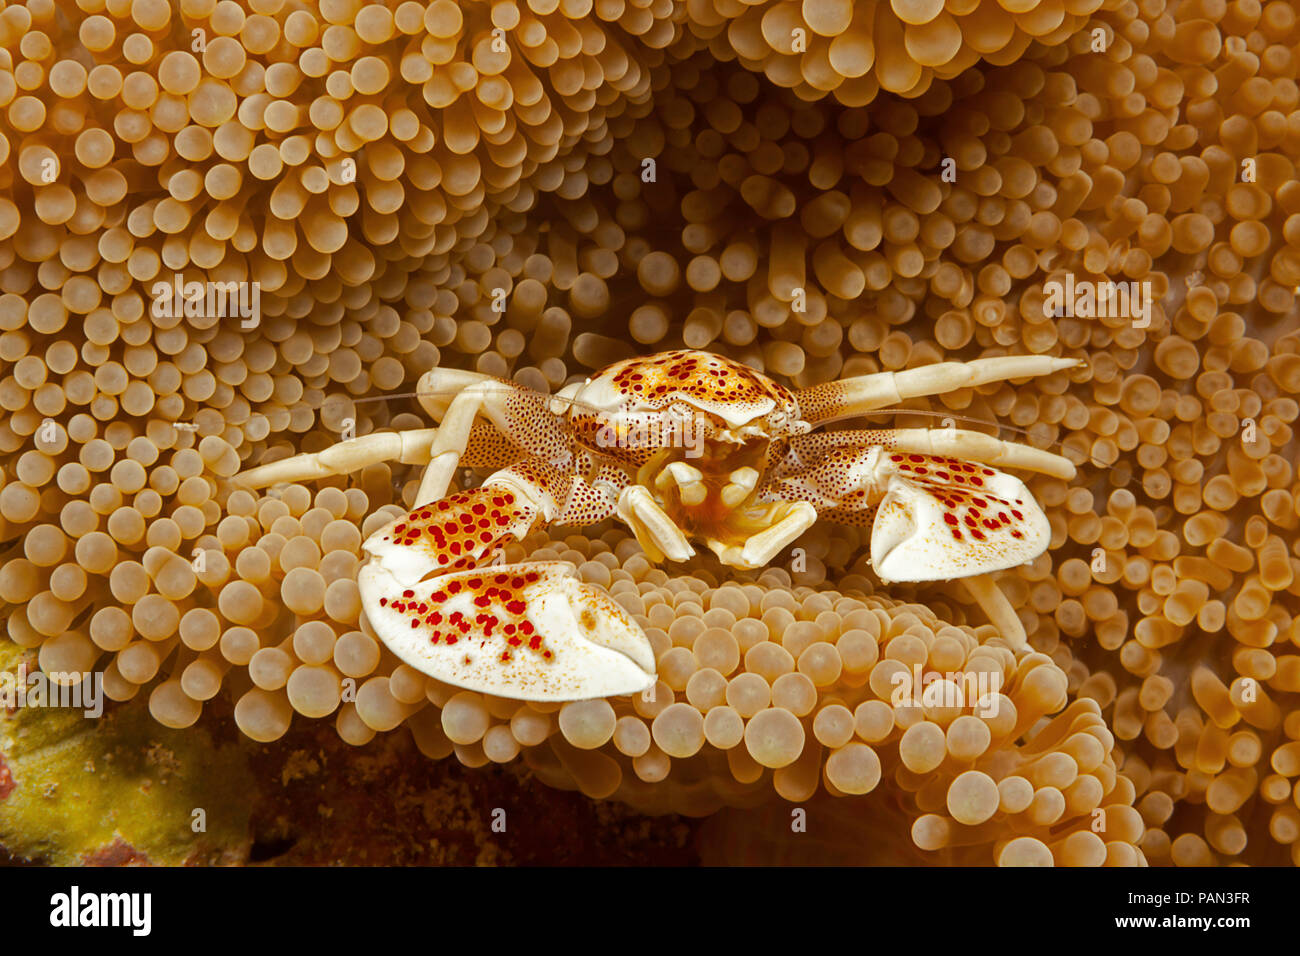 Porcelain crab, Neopetrolisthes maculata, on anemone, Yap, Micronesia. Stock Photo